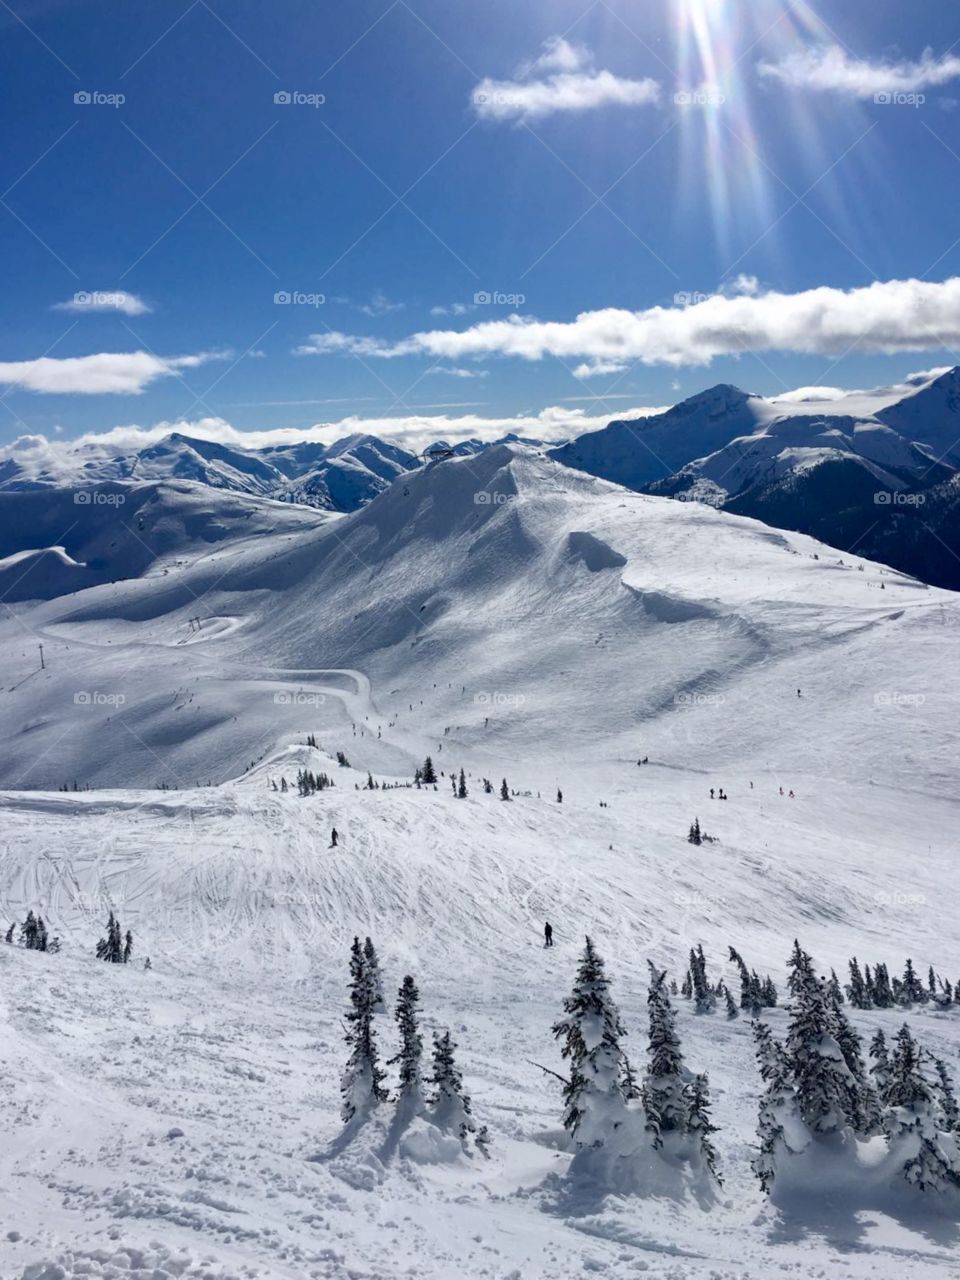 Mountain peaks 
Whistler, Canada